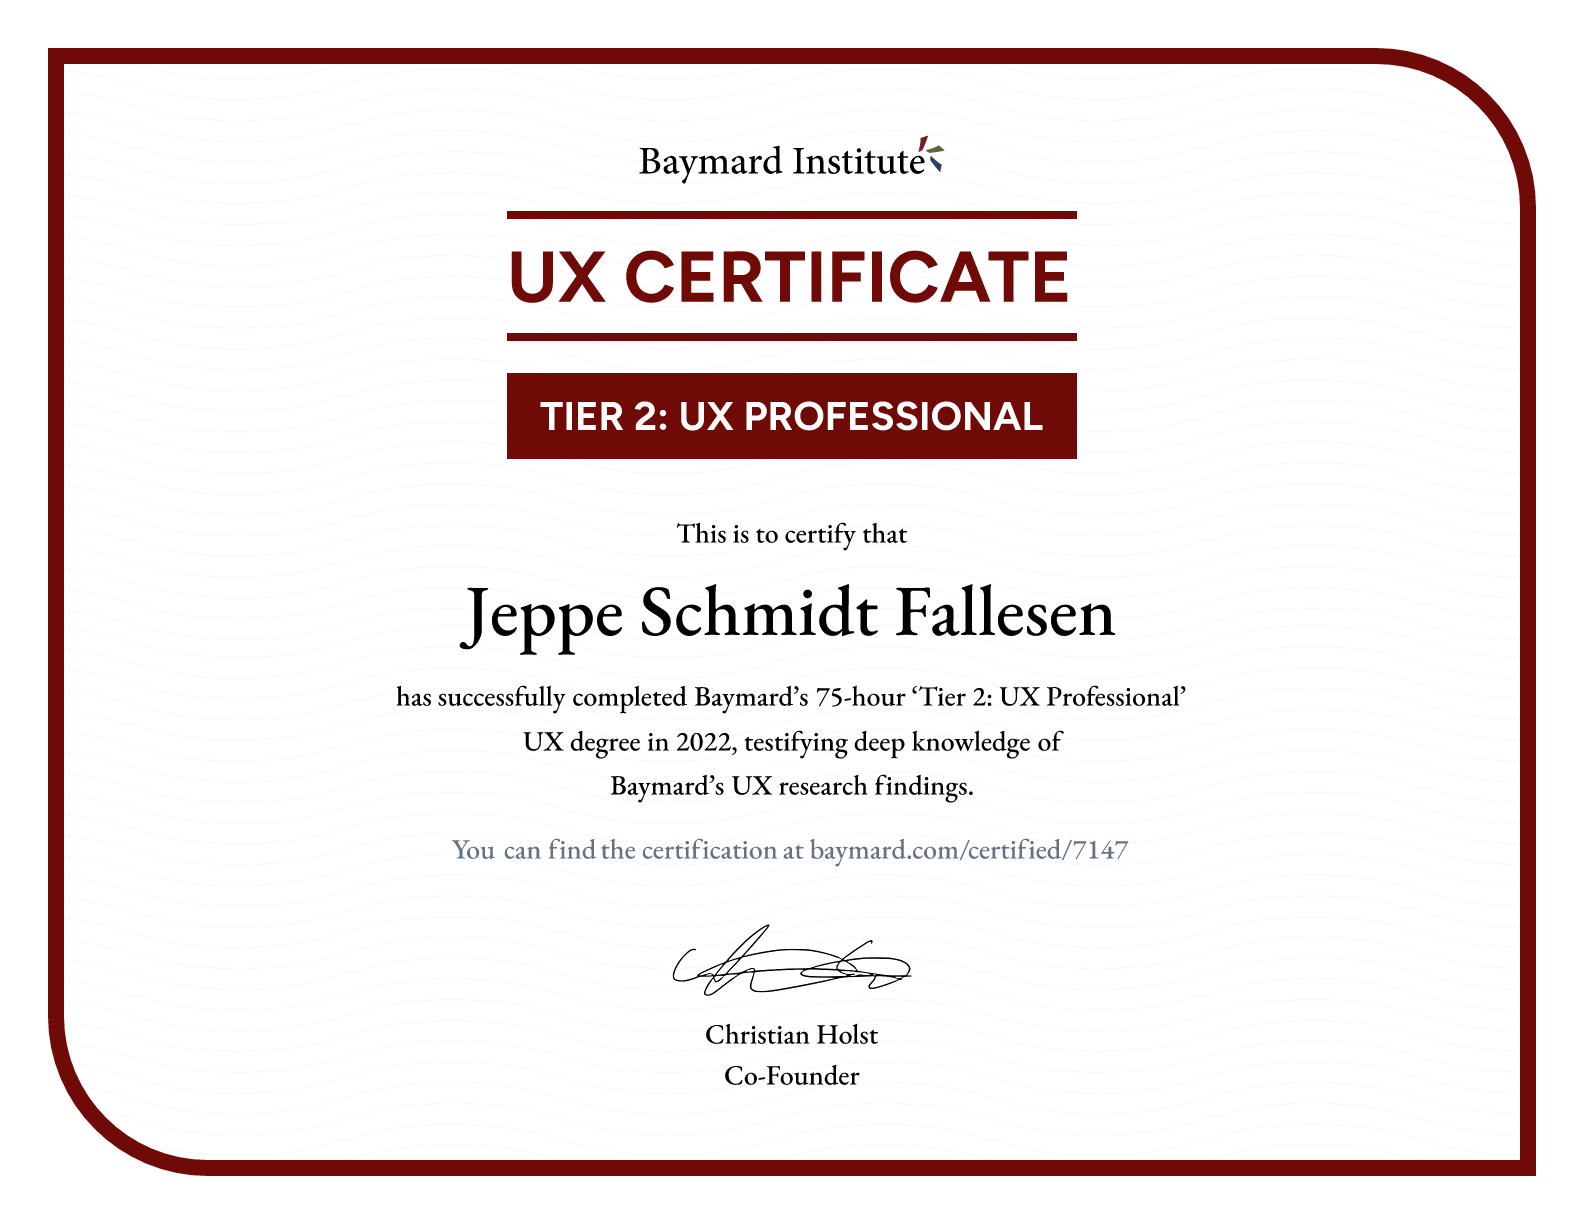 Jeppe Schmidt Fallesen’s certificate